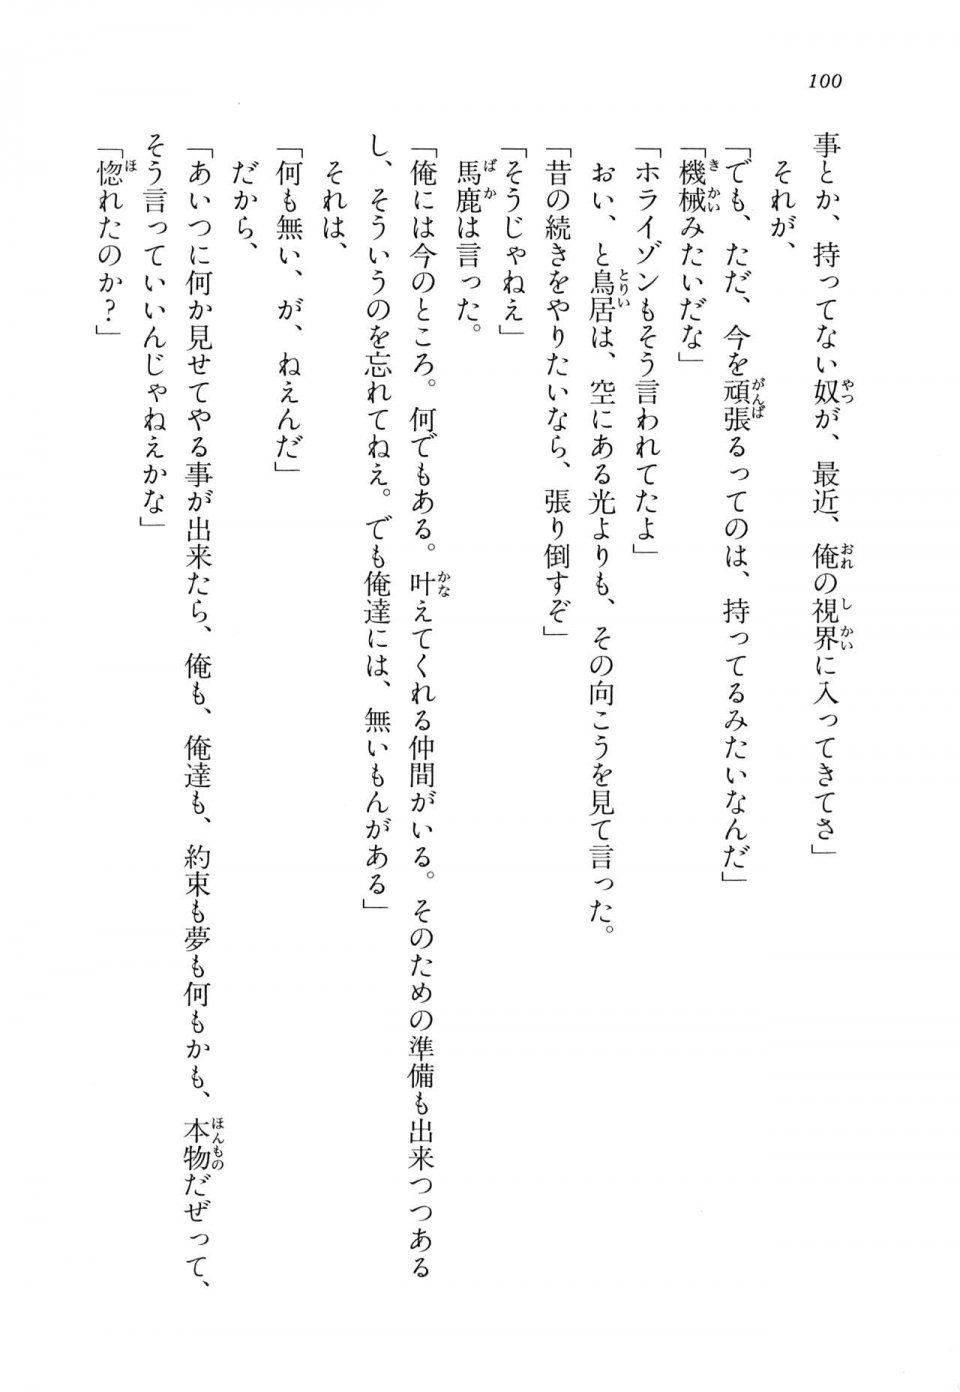 Kyoukai Senjou no Horizon BD Special Mininovel Vol 4(2B) - Photo #104